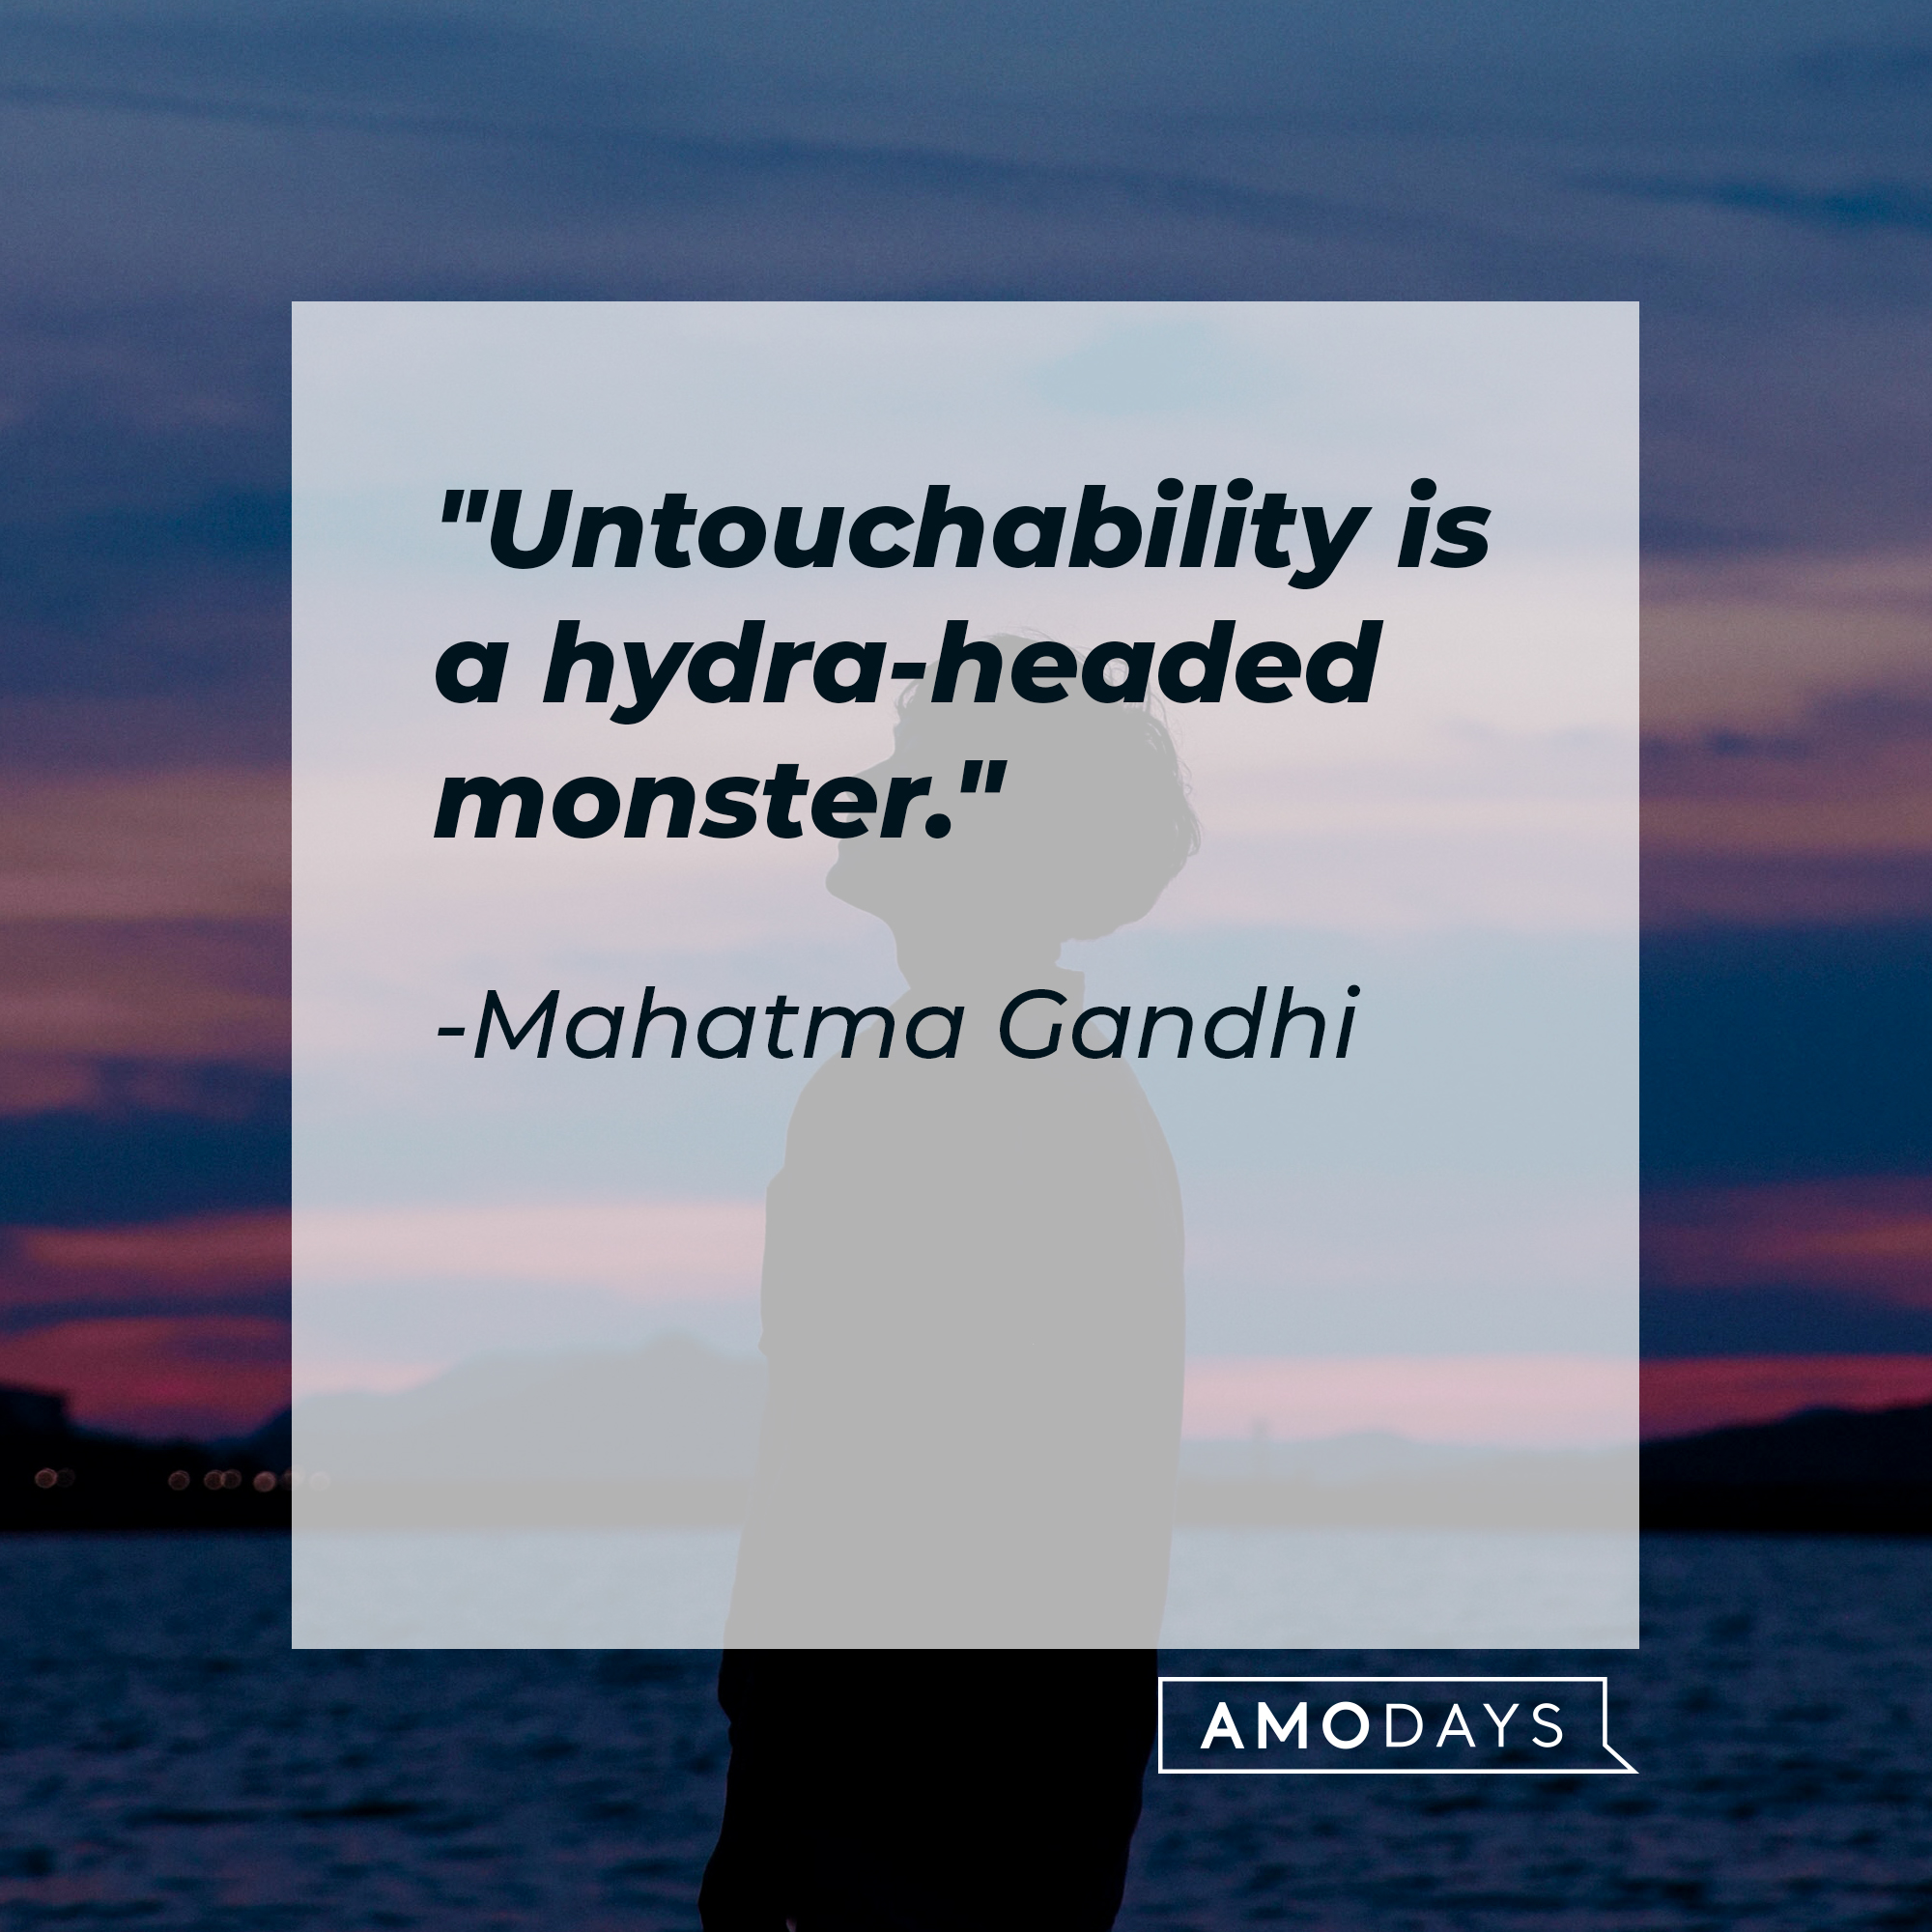 Mahatma Gandhi's quote: "Untouchability is a hydra-headed monster." | Source: Unsplash